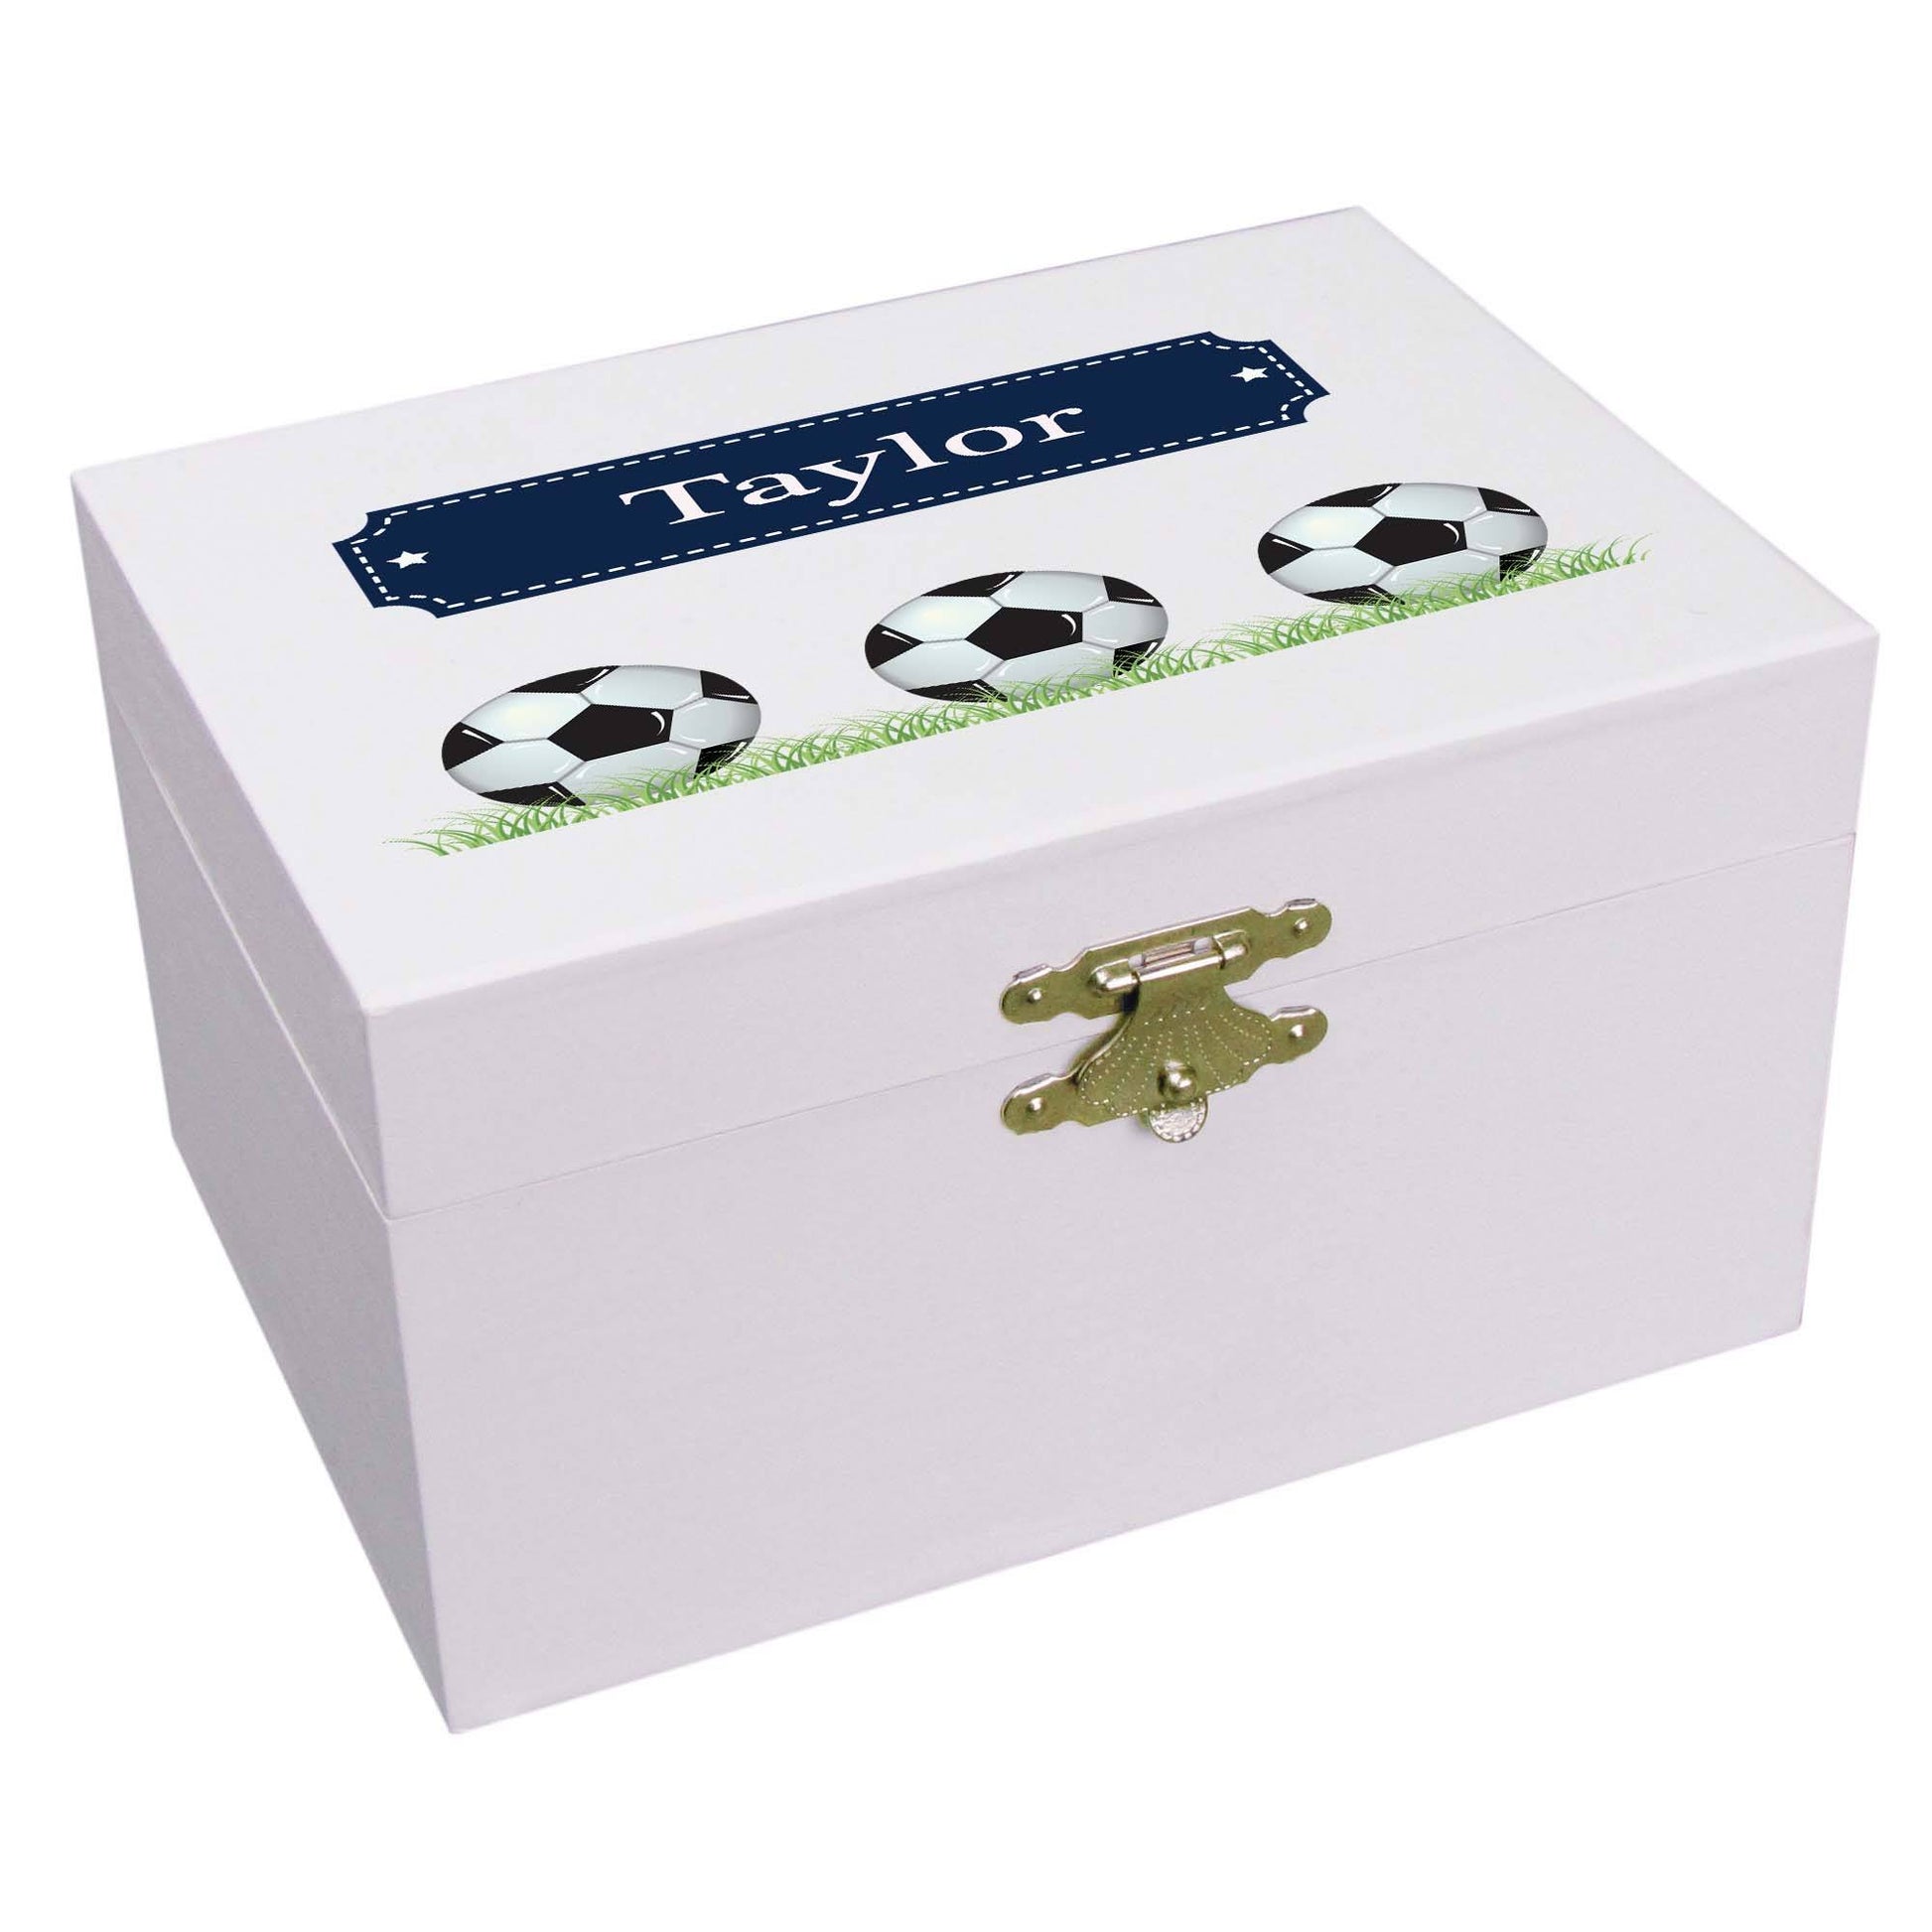 Personalized Ballerina Jewelry Box with Soccer Balls design